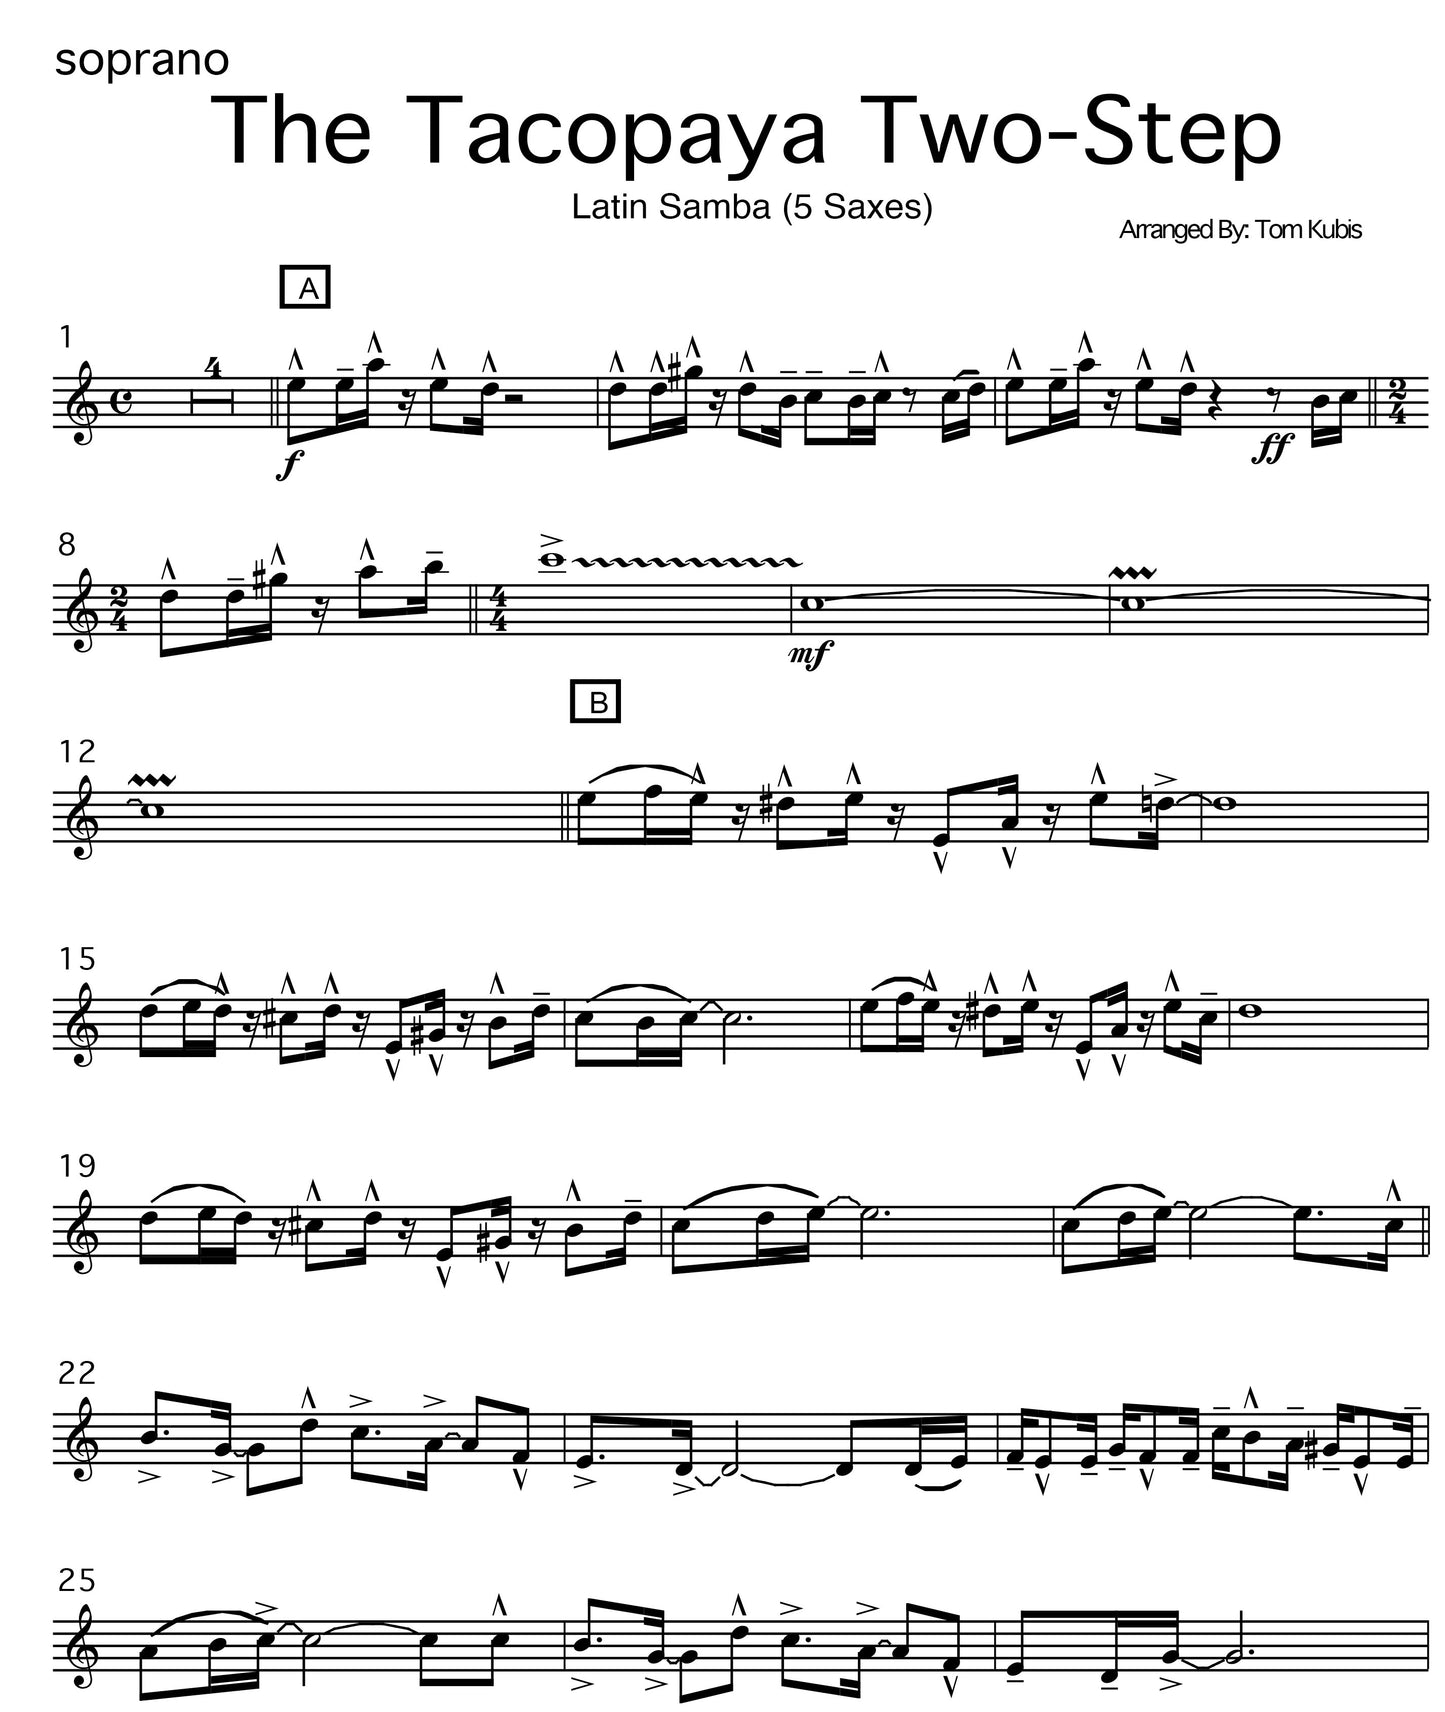 The Tacopaya Two-Step